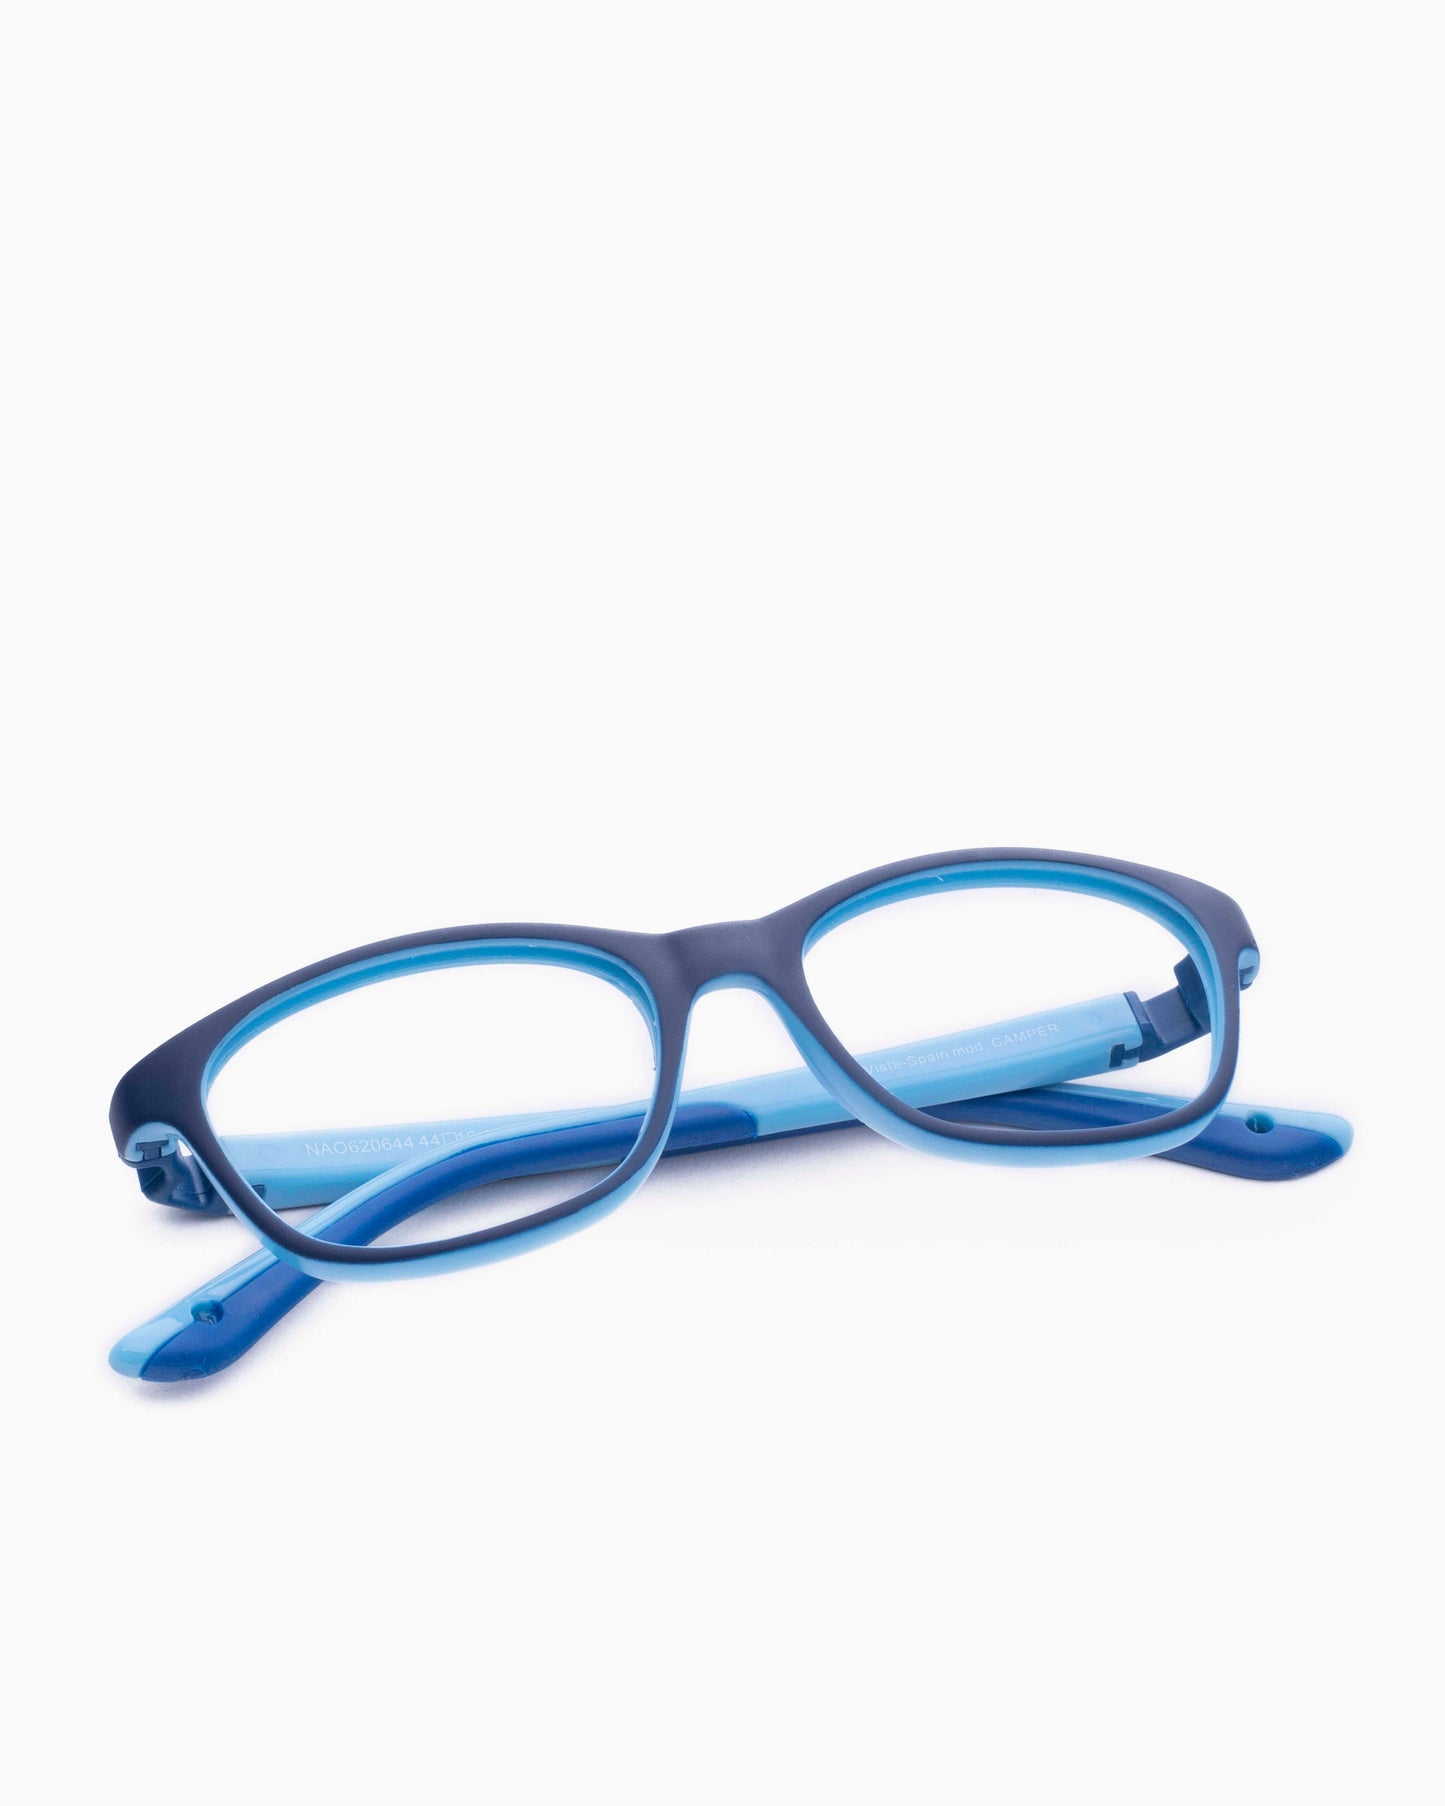 Nanovista Kids - CAMPER - BLUEBLUE | glasses bar